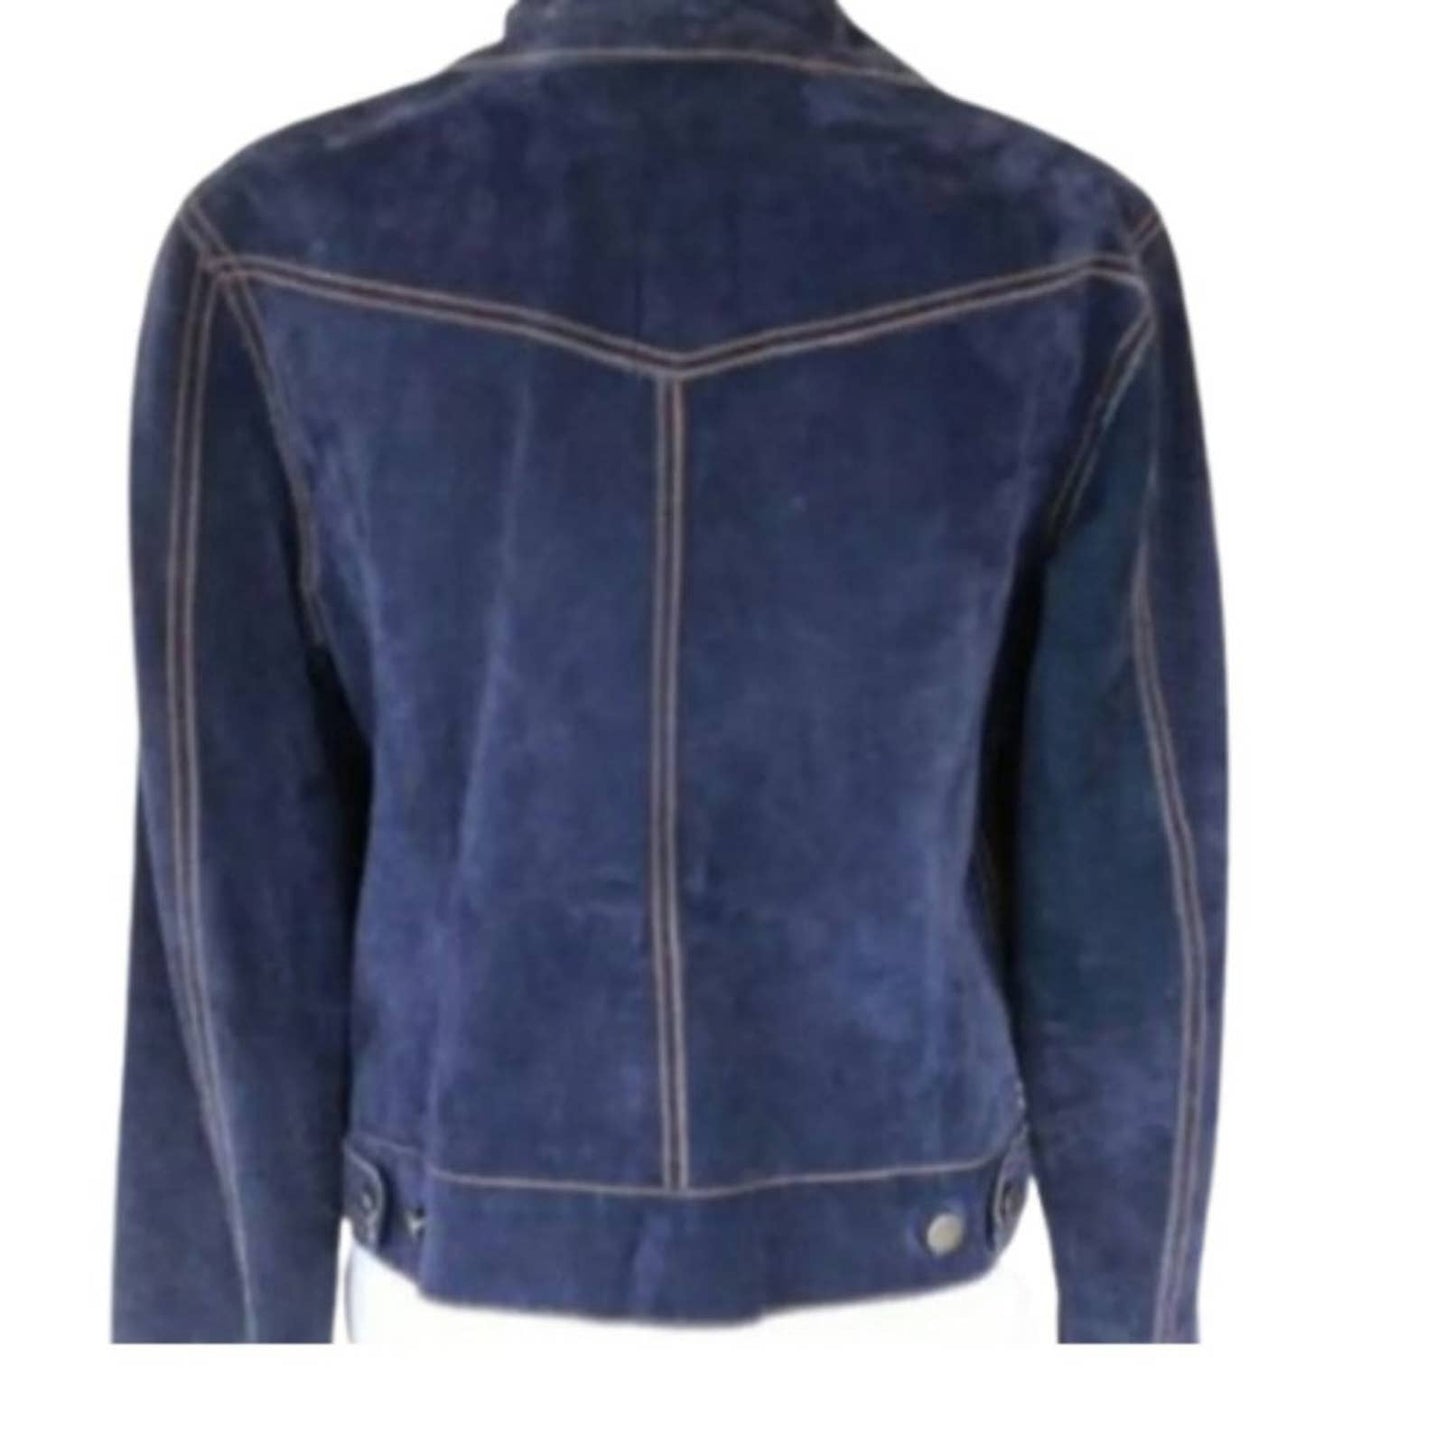 Isaac Mizrahi Navy Blue Leather Suede Trucker Jacket Never Worn Size M